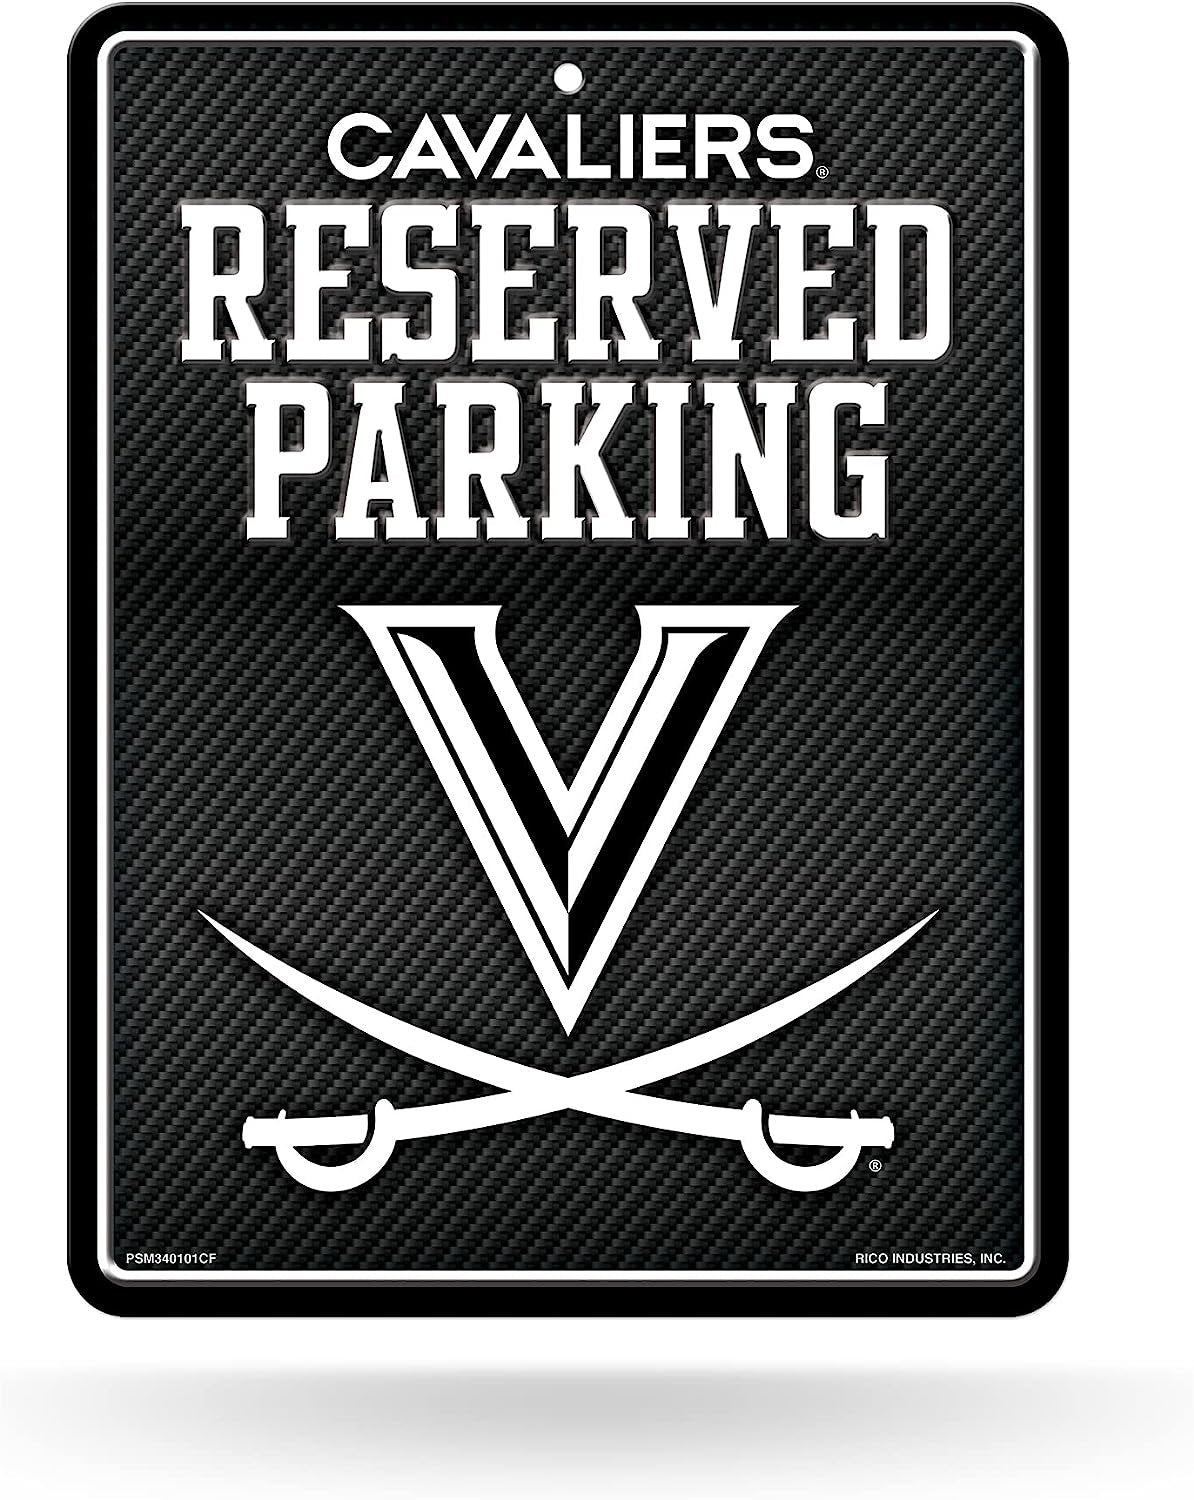 University of Virginia Cavaliers Metal Parking Novelty Wall Sign 8.5 x 11 Inch Carbon Fiber Design